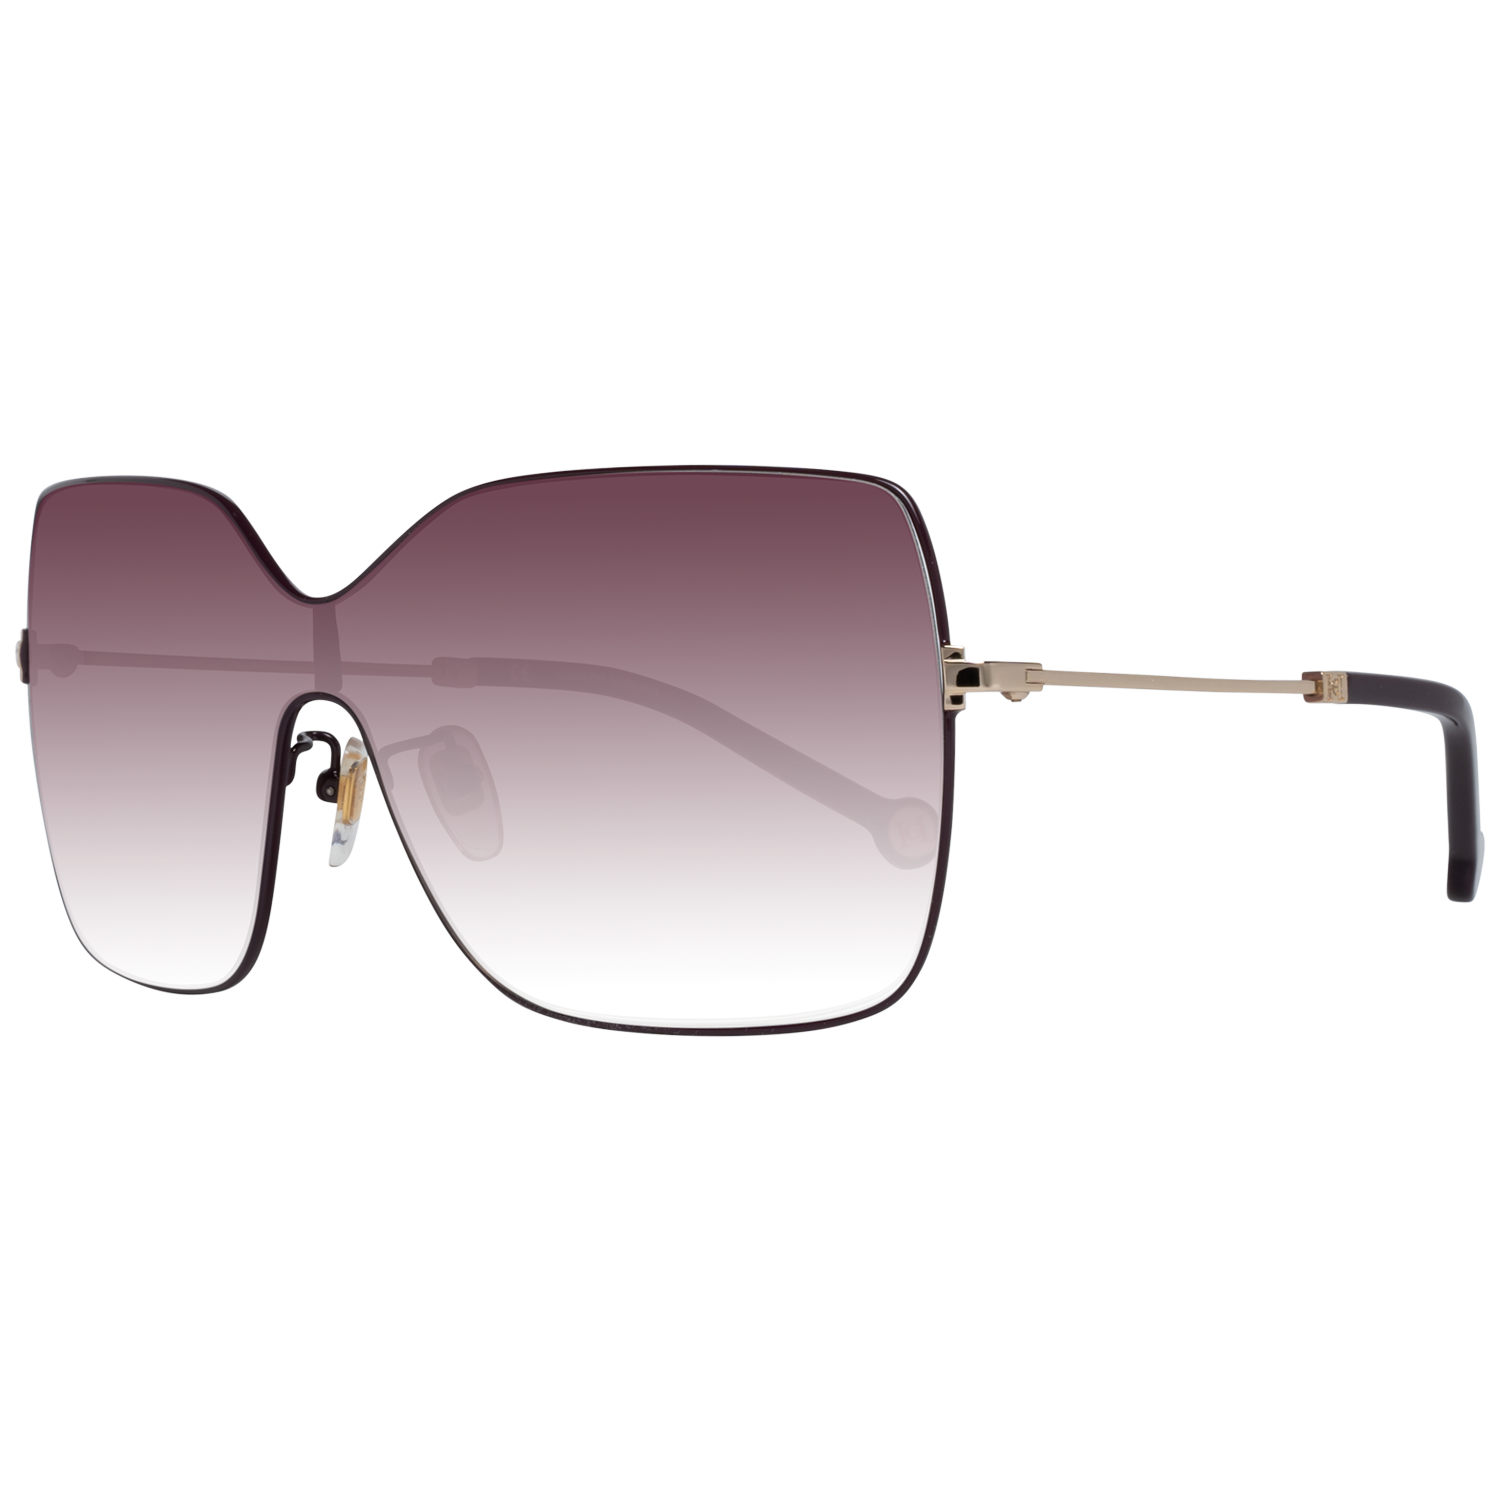 Carolina Herrera Sunglasses Carolina Herrera Sunglasses SHE175 E66 99 Eyeglasses Eyewear UK USA Australia 